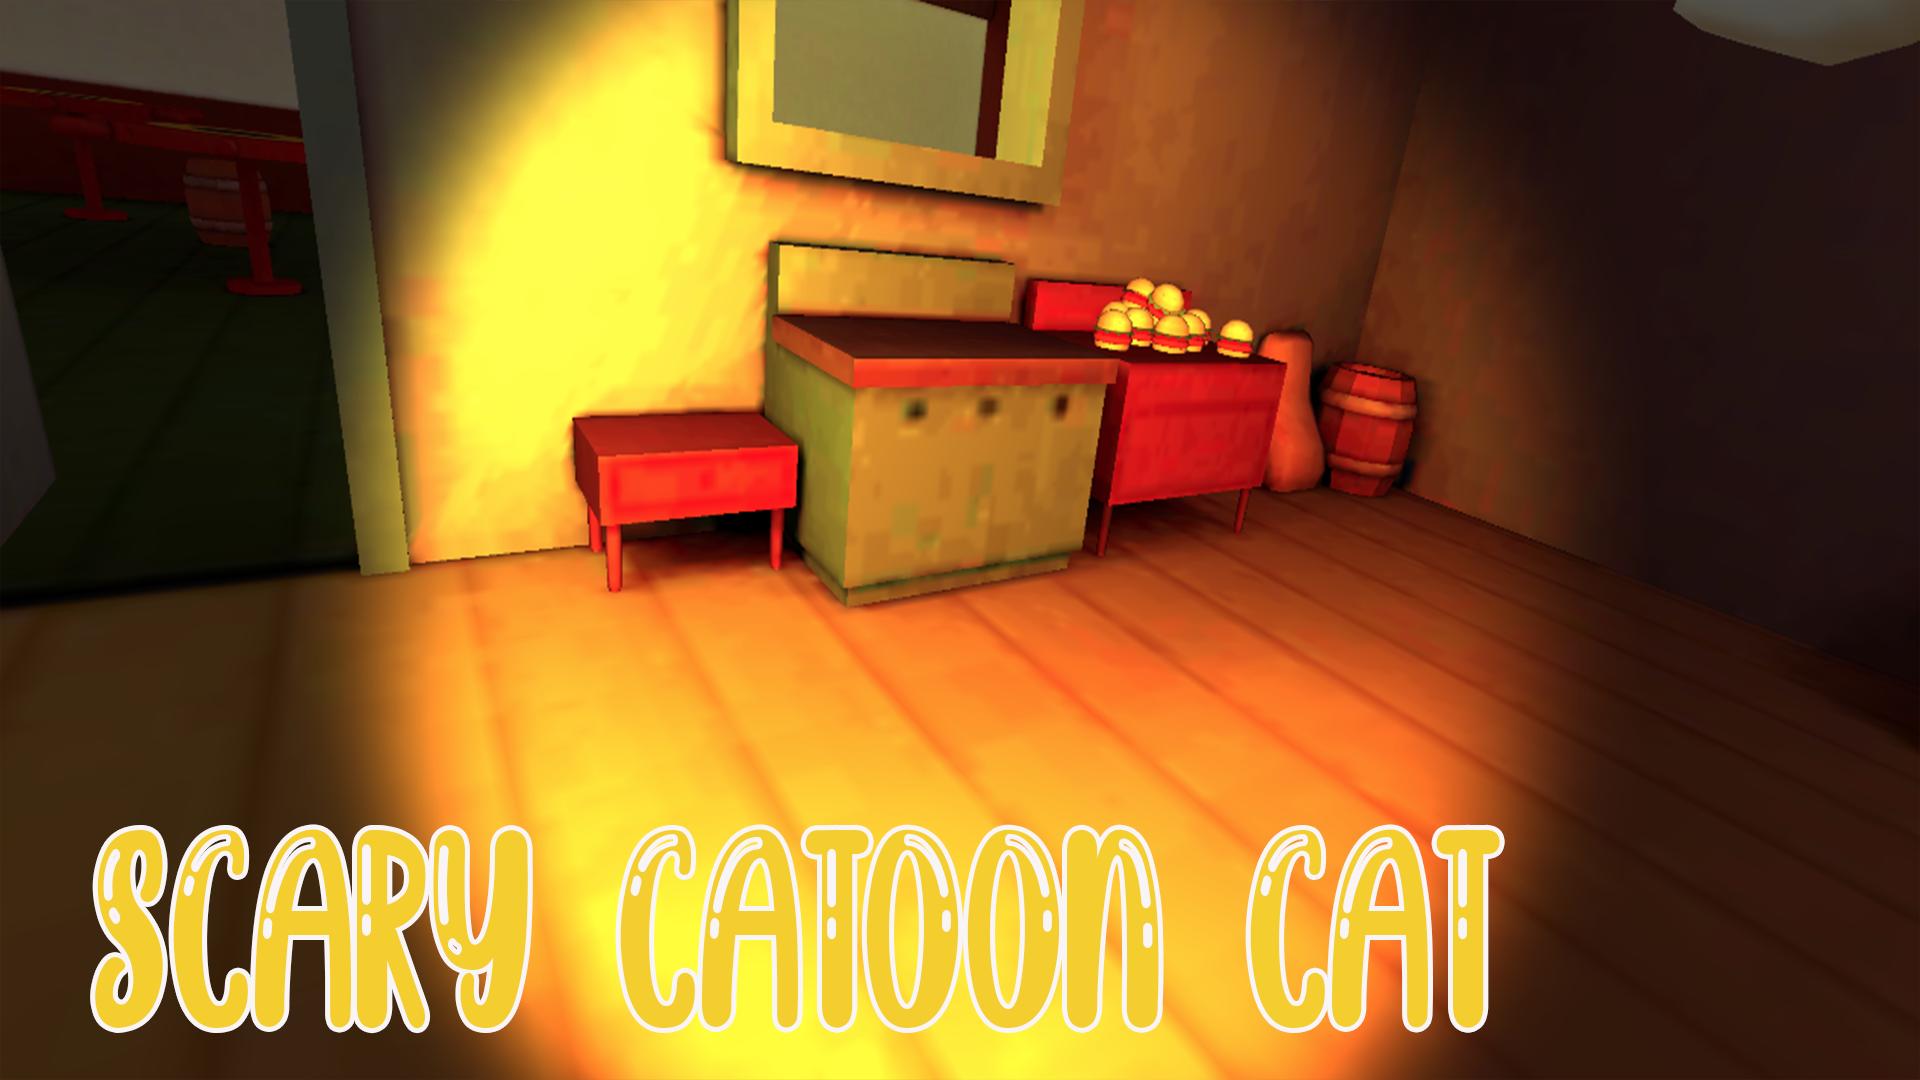 Scary Cartoon Cat Escape Game 1.0 Screenshot 6